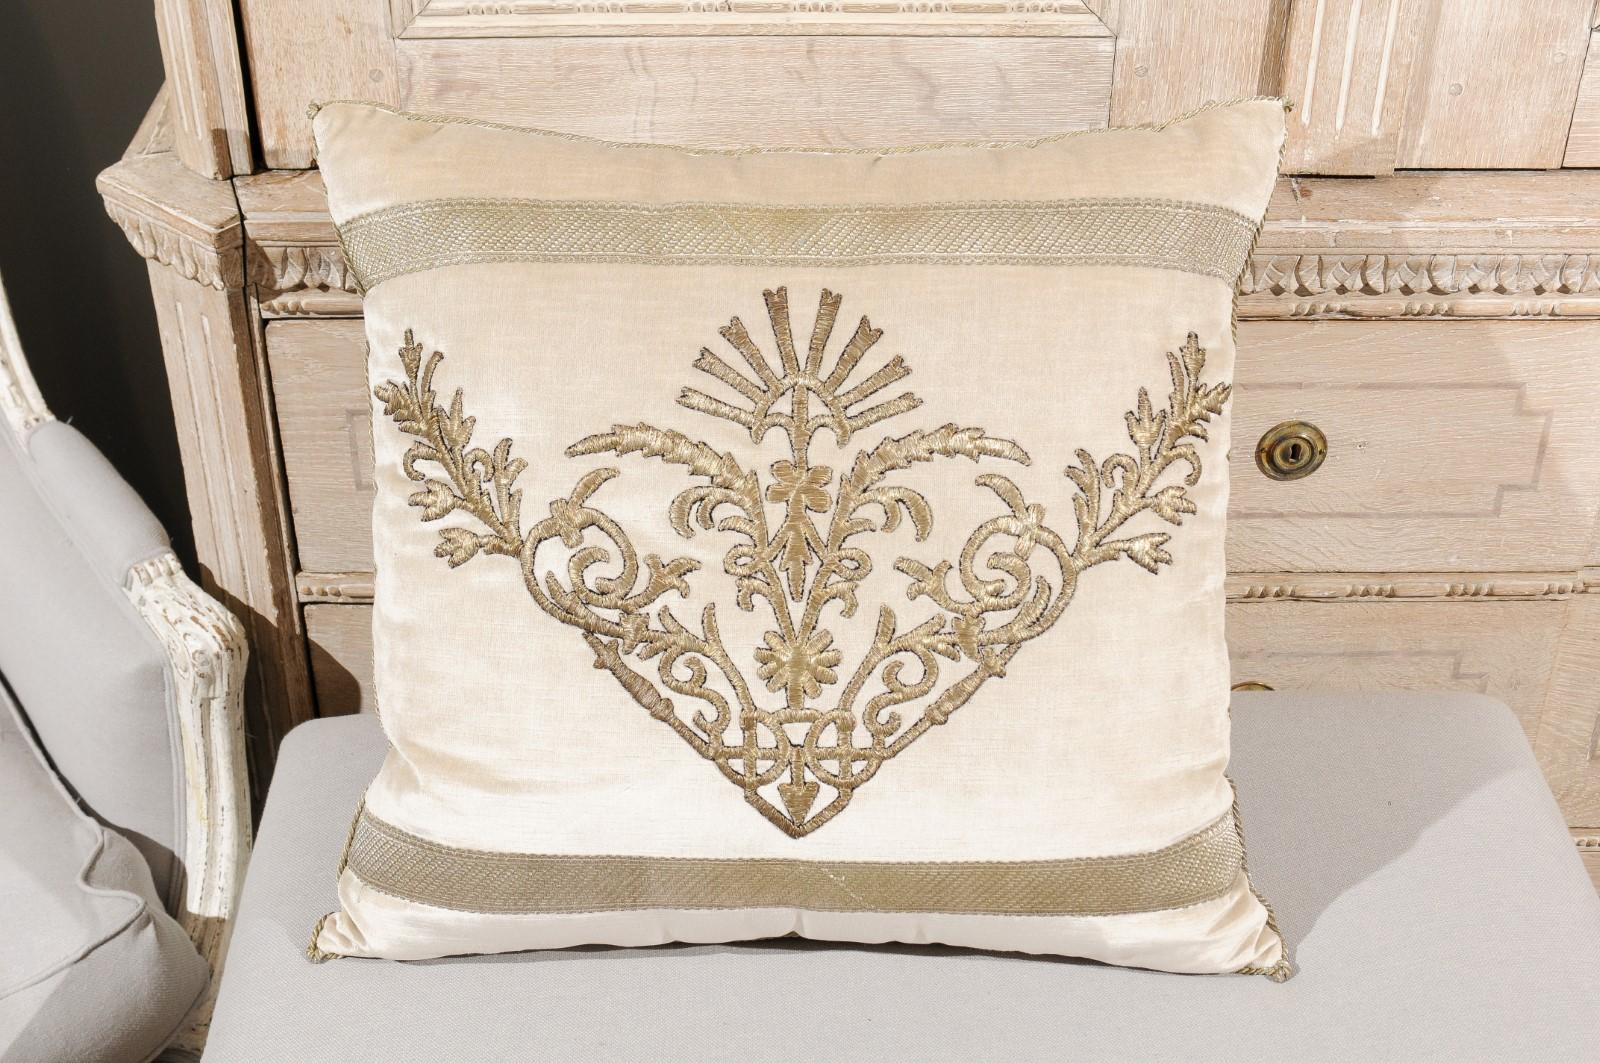 Antique Ottoman Empire Raised Silver Metallic Embroidery on Oyster Velvet Pillow 7